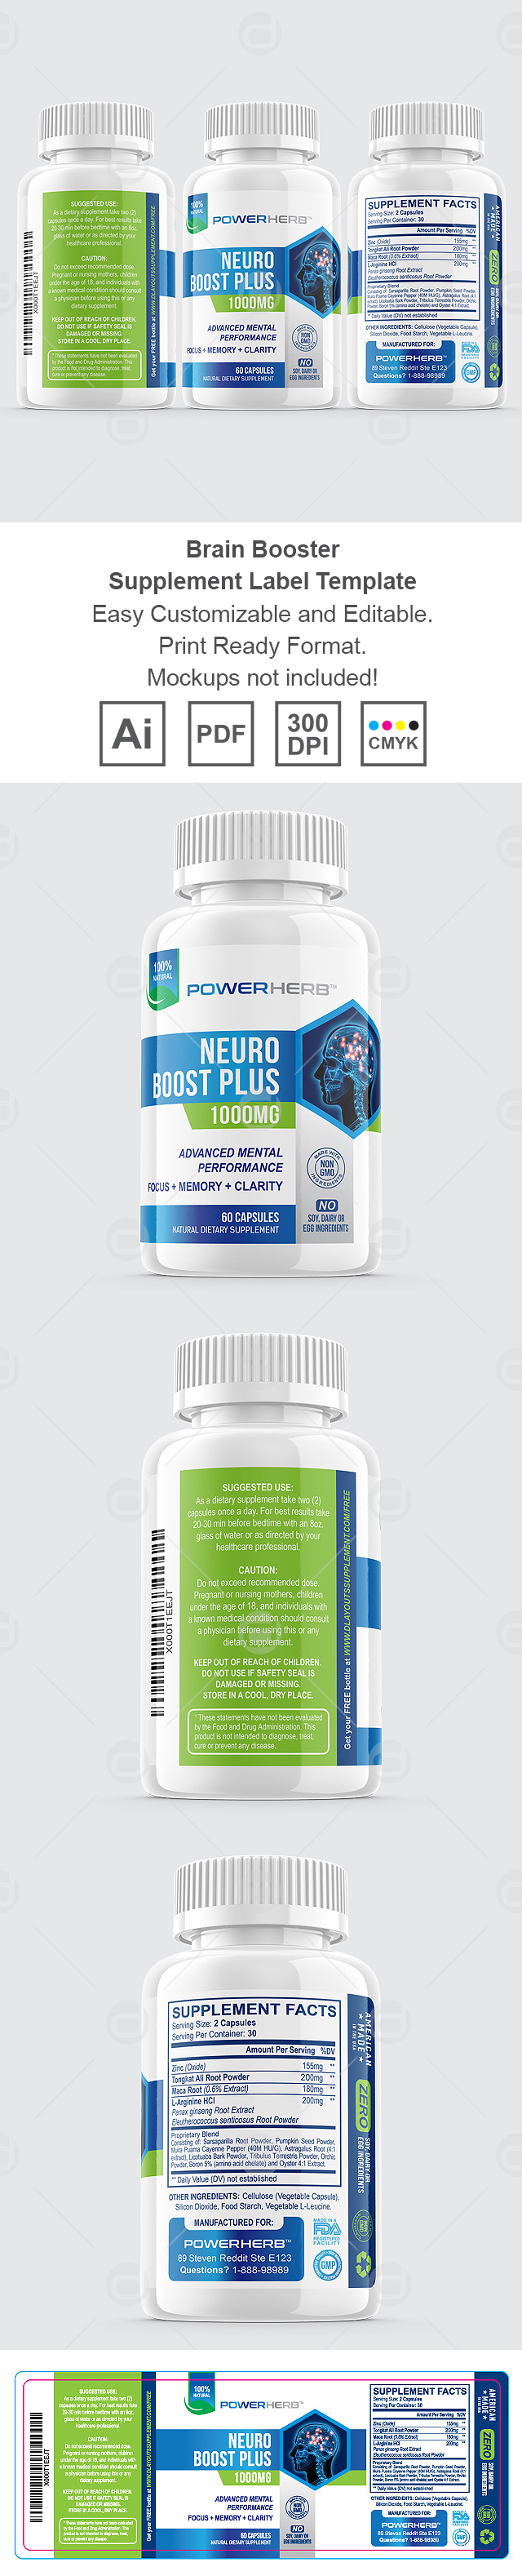 Brain Booster Supplement Label Template